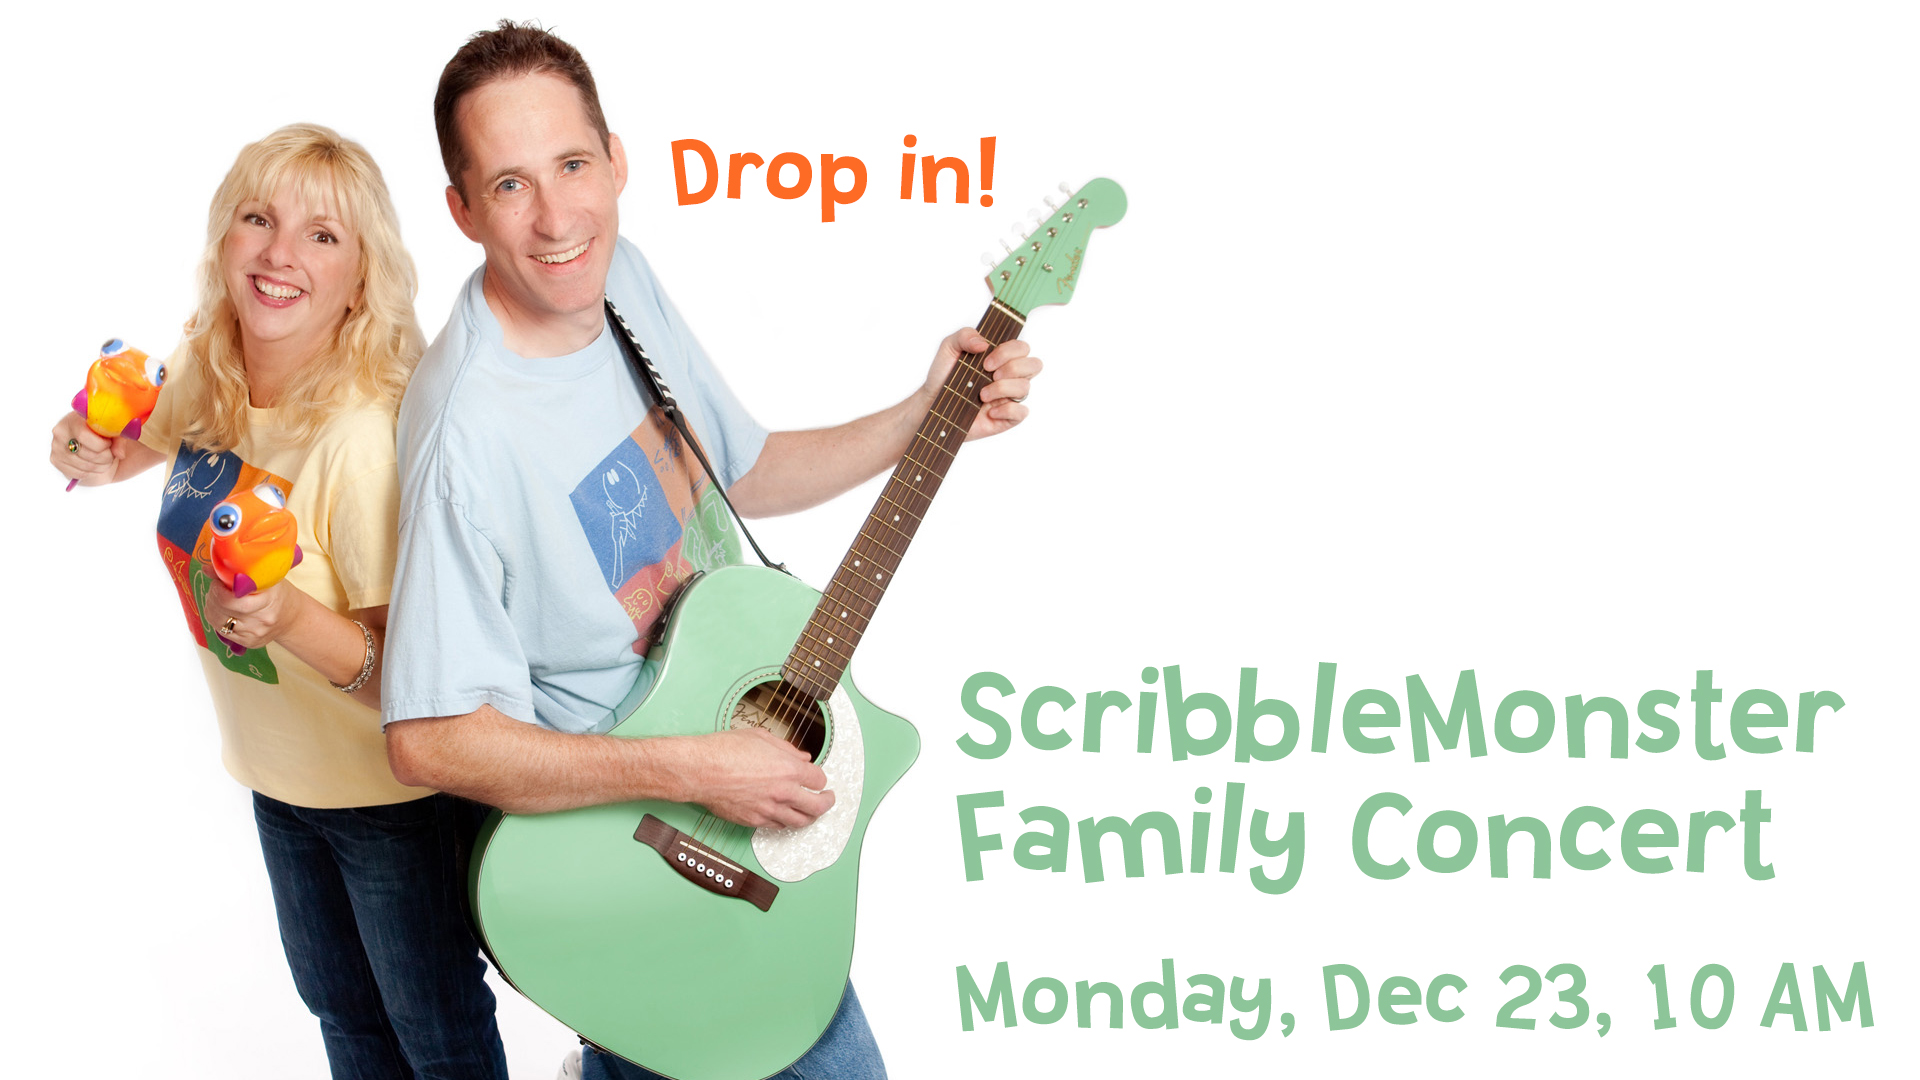 Blonde woman playing maracas, smiling, man playing green guitar, smiling, wording Family Concert Scribblemonster Drop in Monday Dec 23